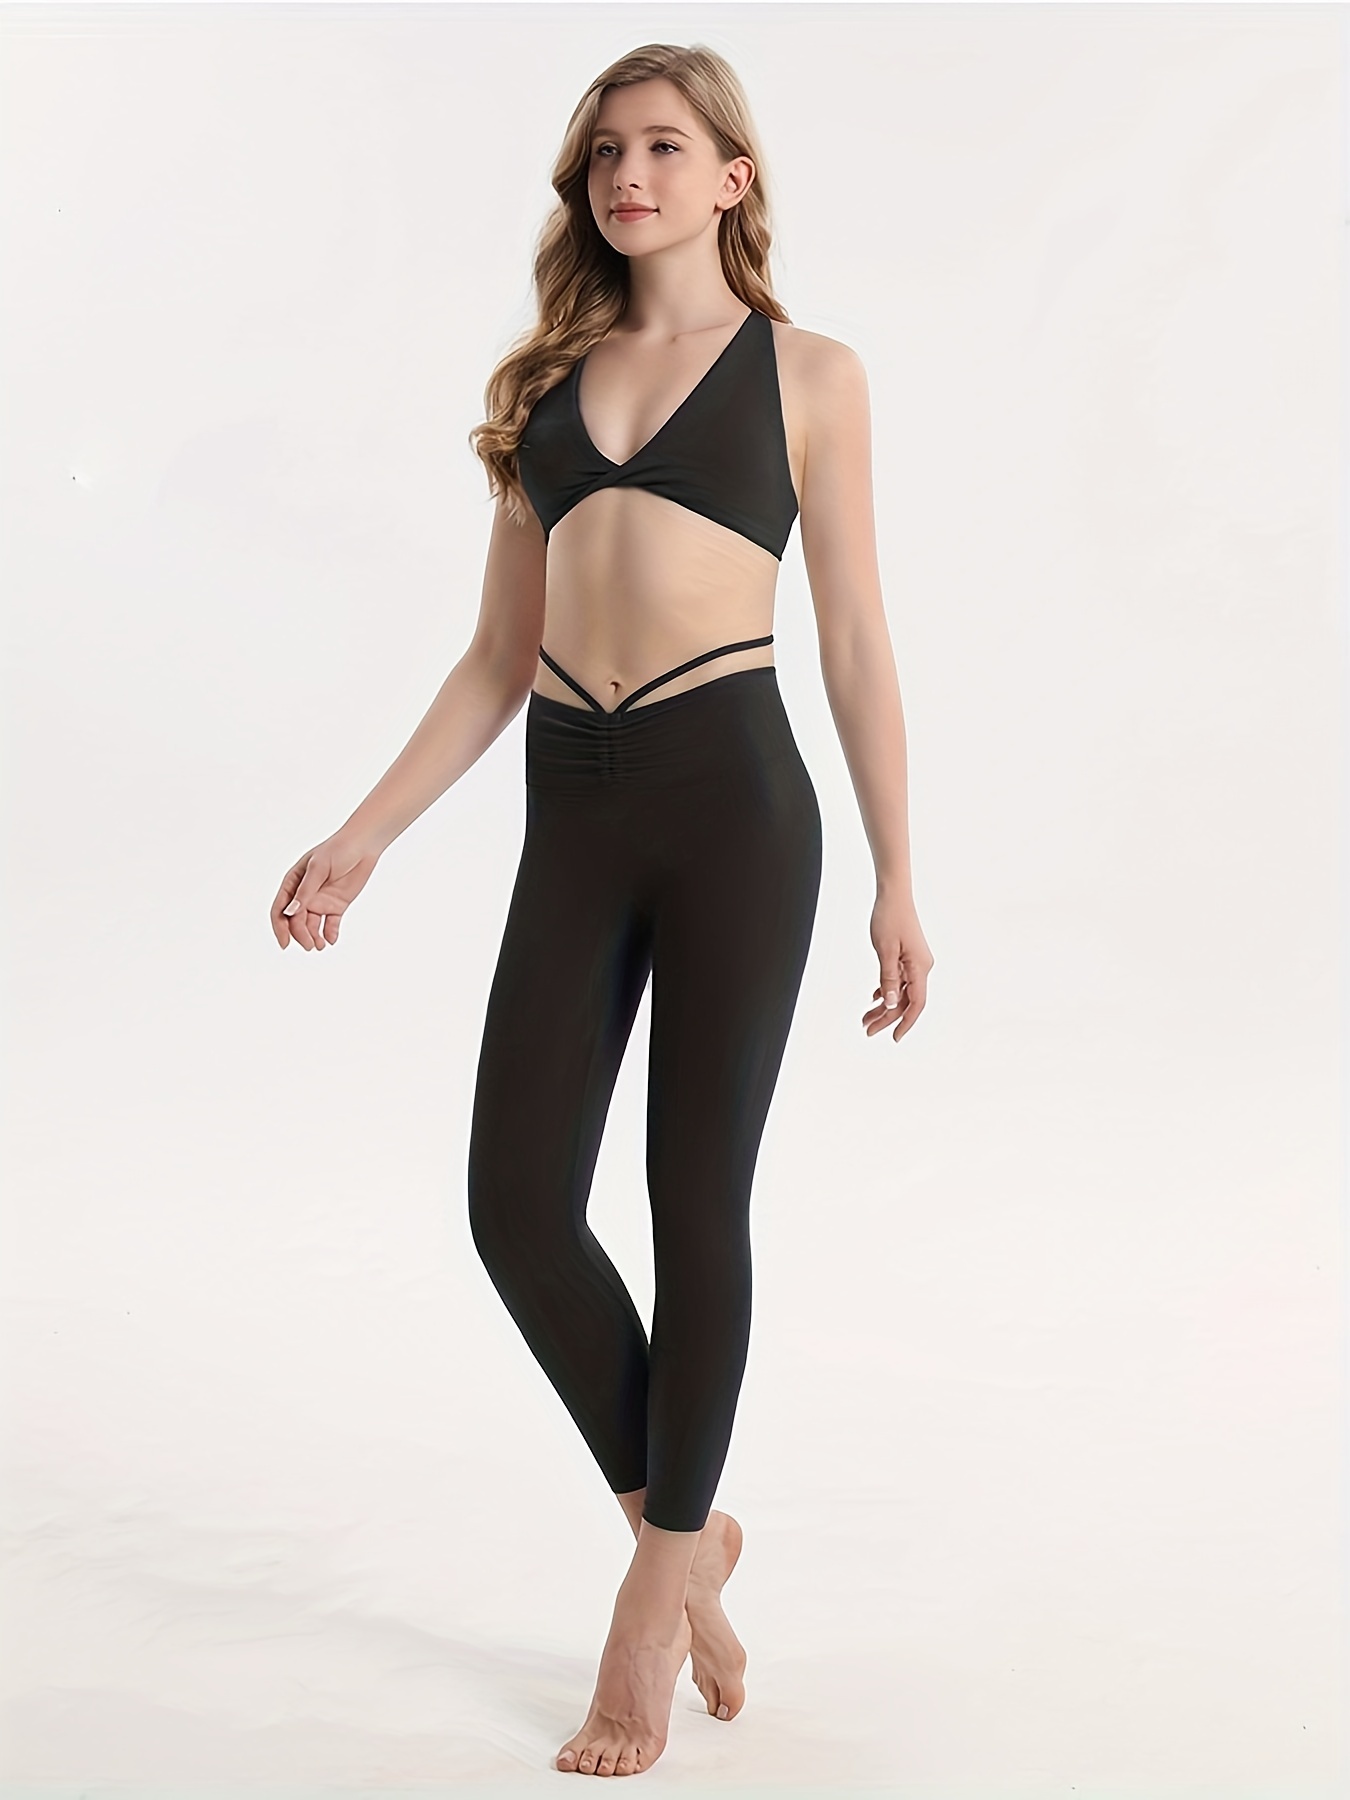 Black Activewear/Yoga Stirrup Leggings With Foot Straps, Women's